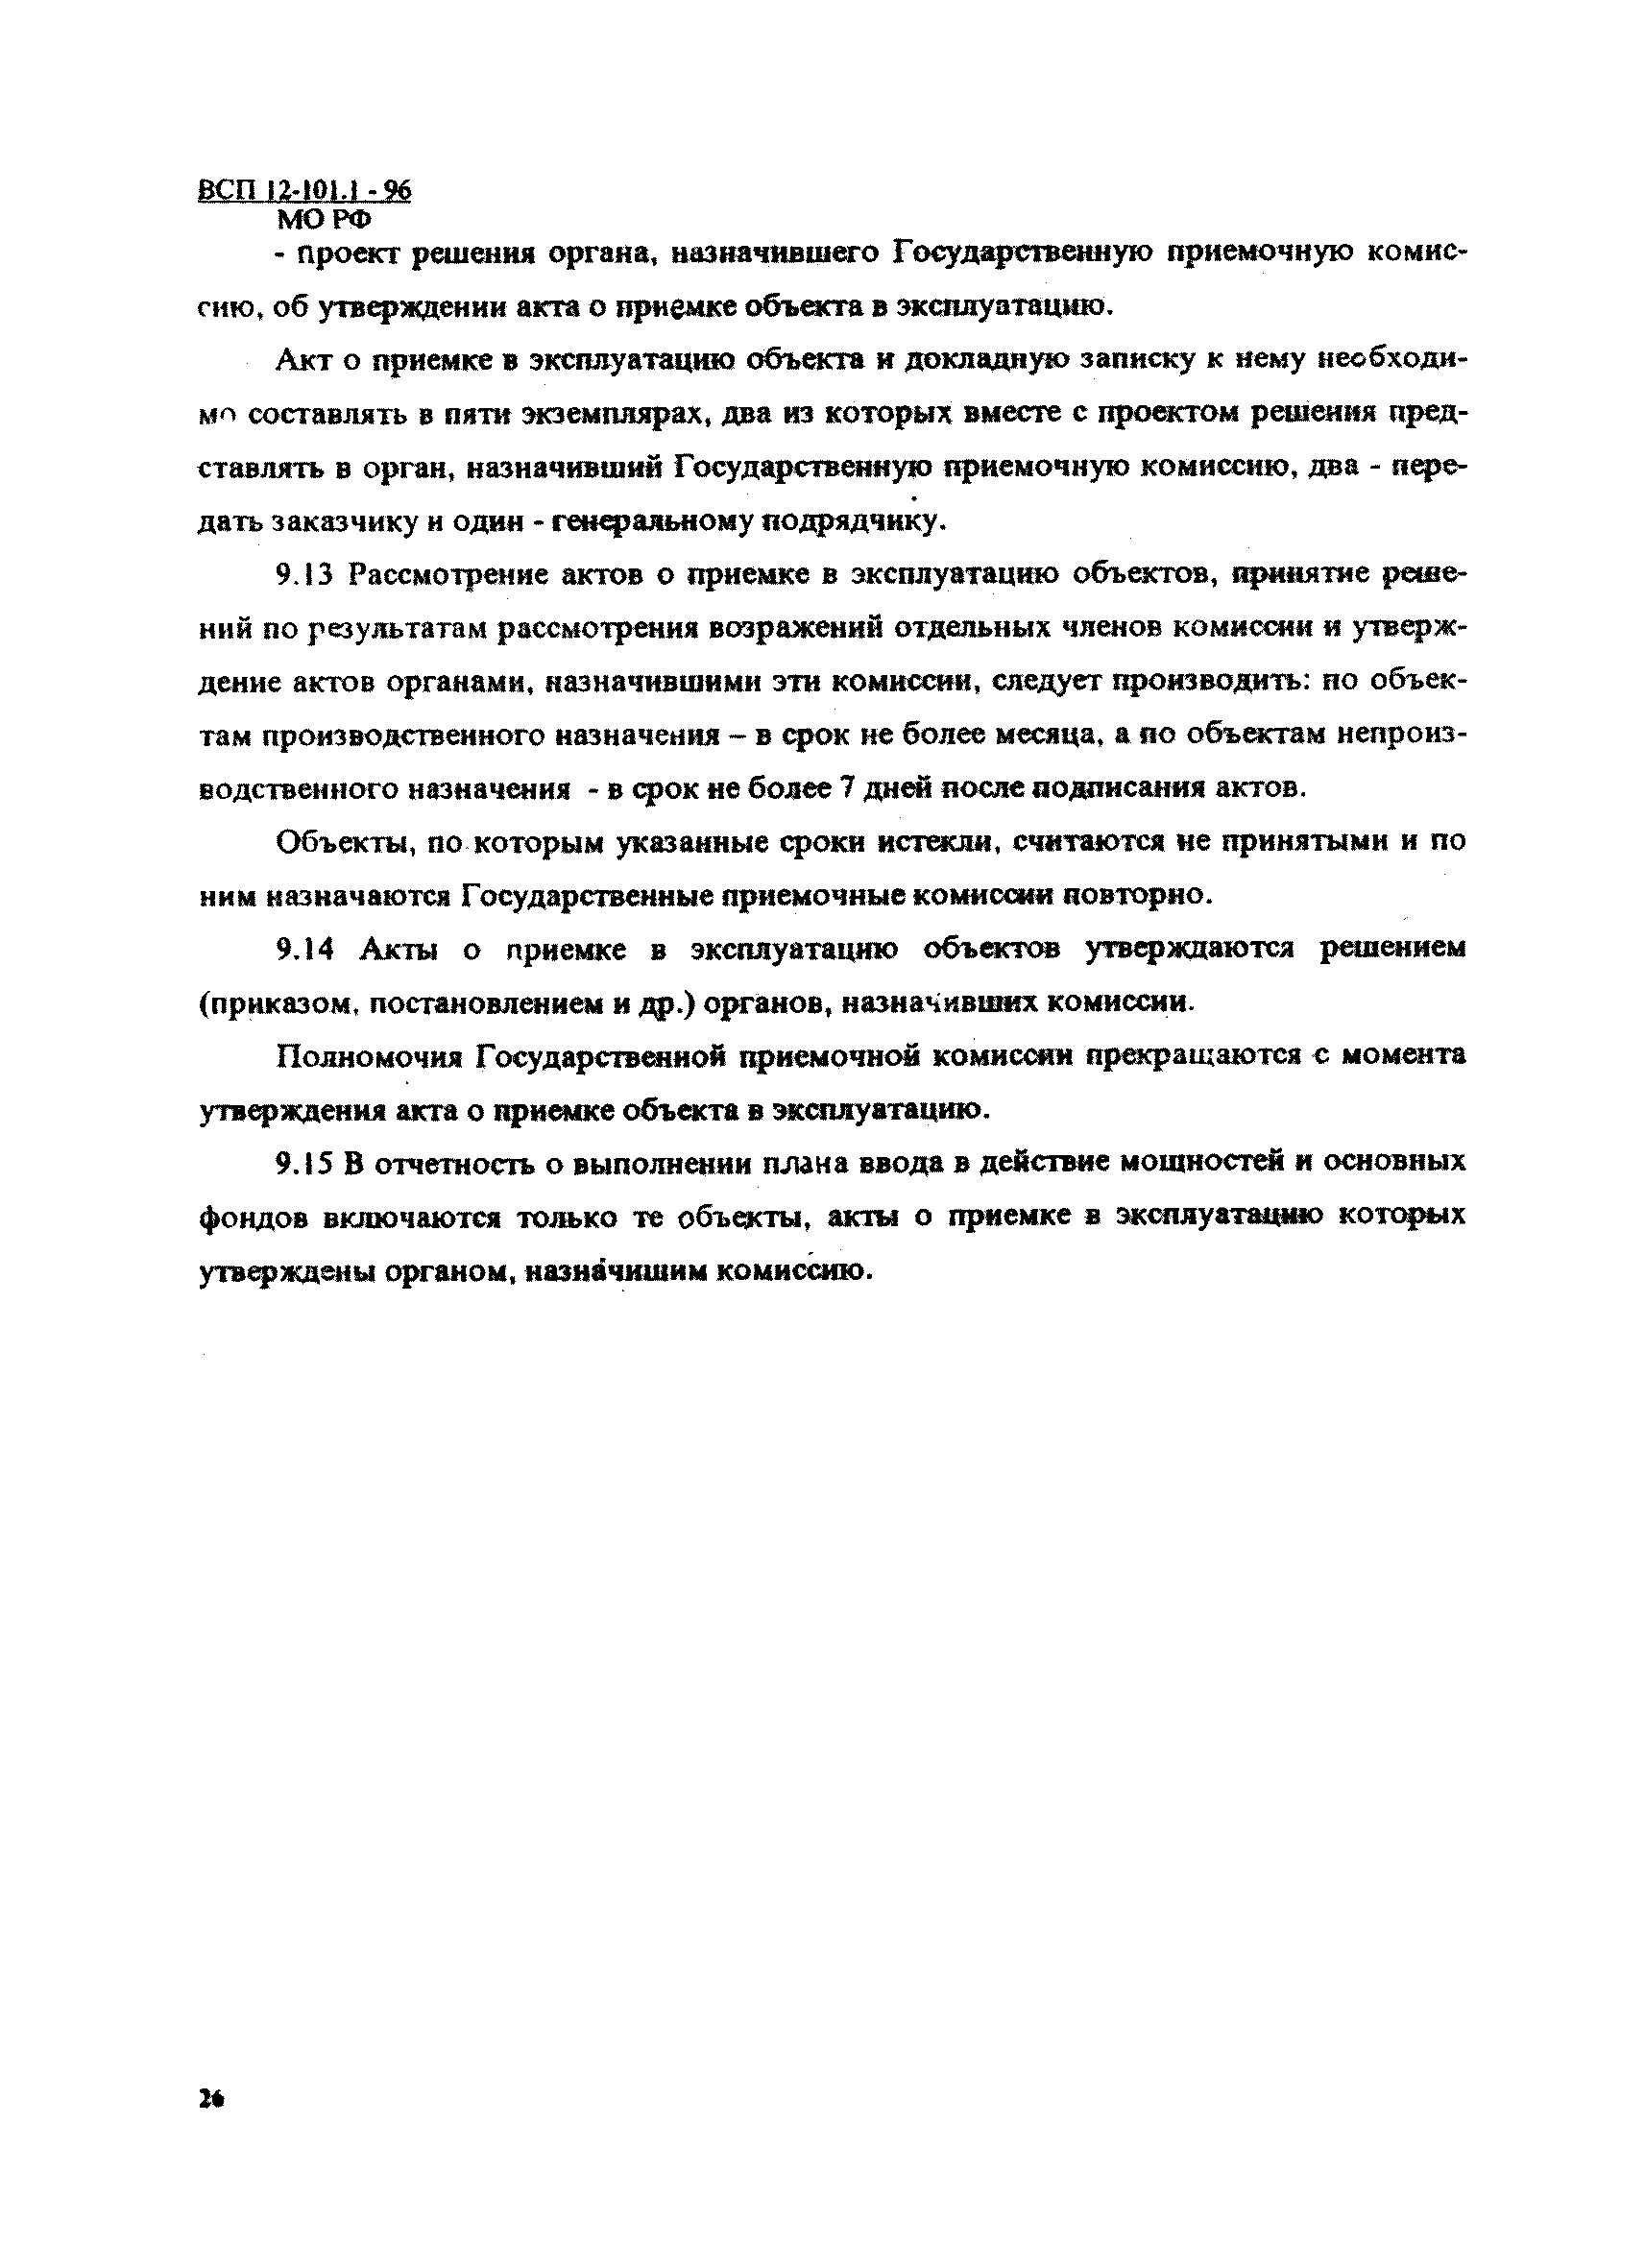 ВСП 12-101.1-96/МО РФ